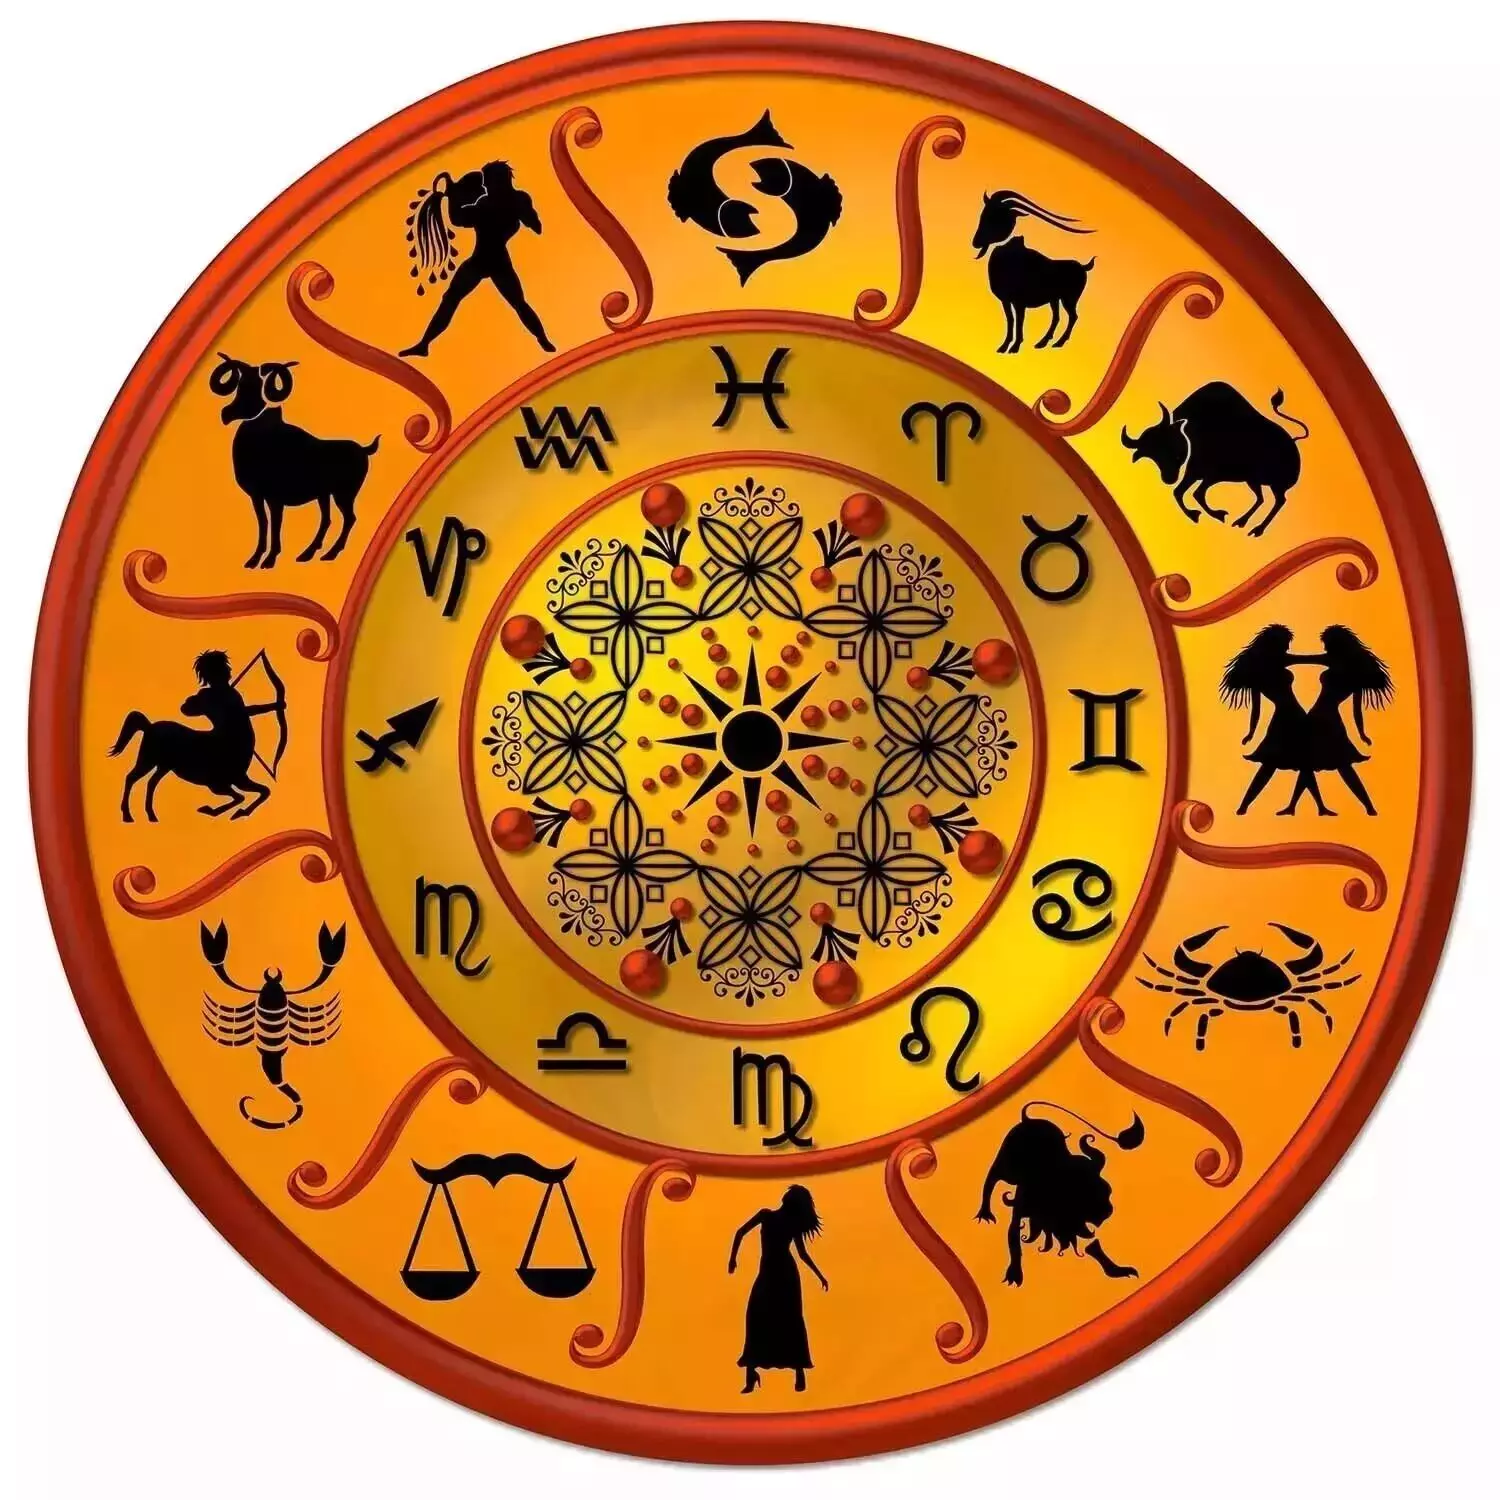 27 November – Know your todays horoscope